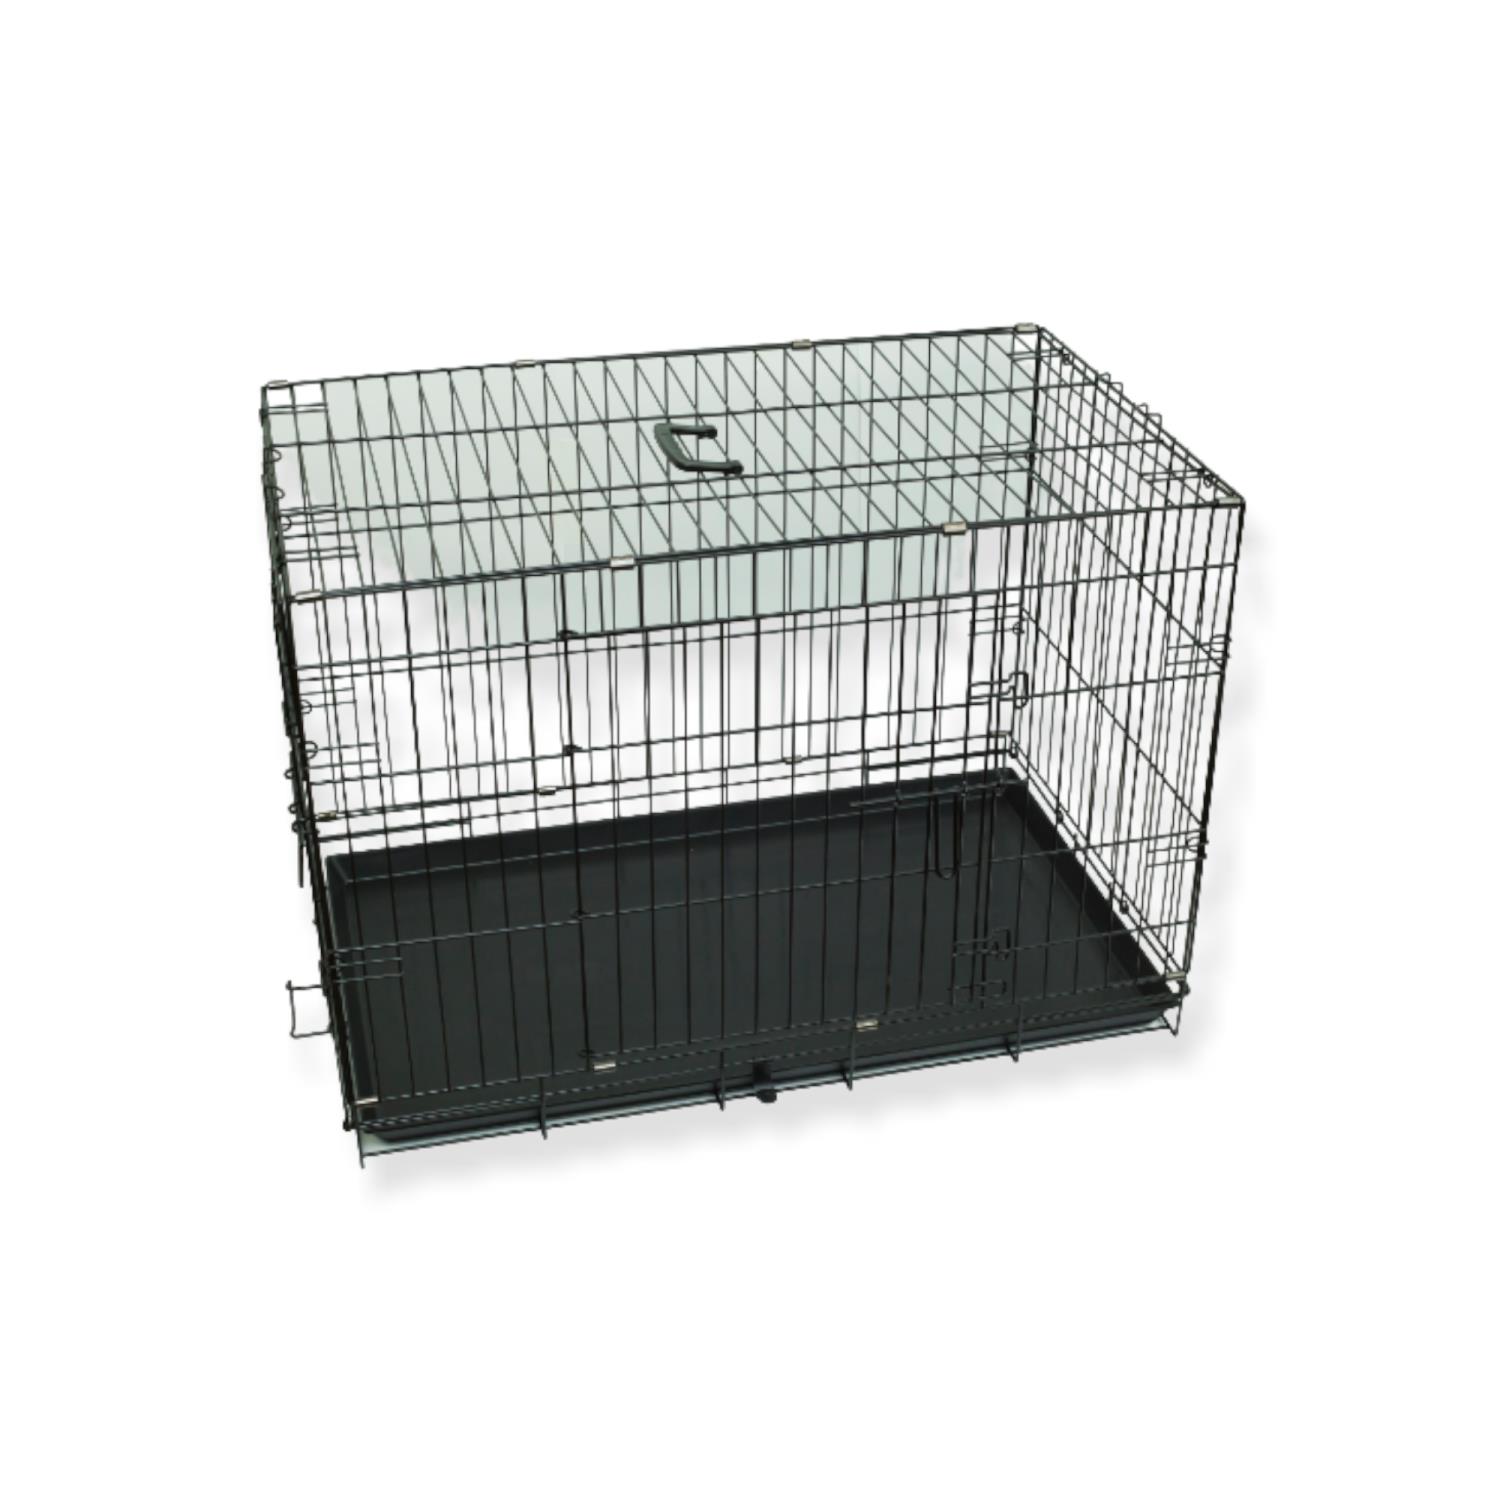 Crate Μεταλλικό Κλουβί Περιορισμού Σκύλου Με Διπλή Πόρτα 122χ69χ79cm Dsa48